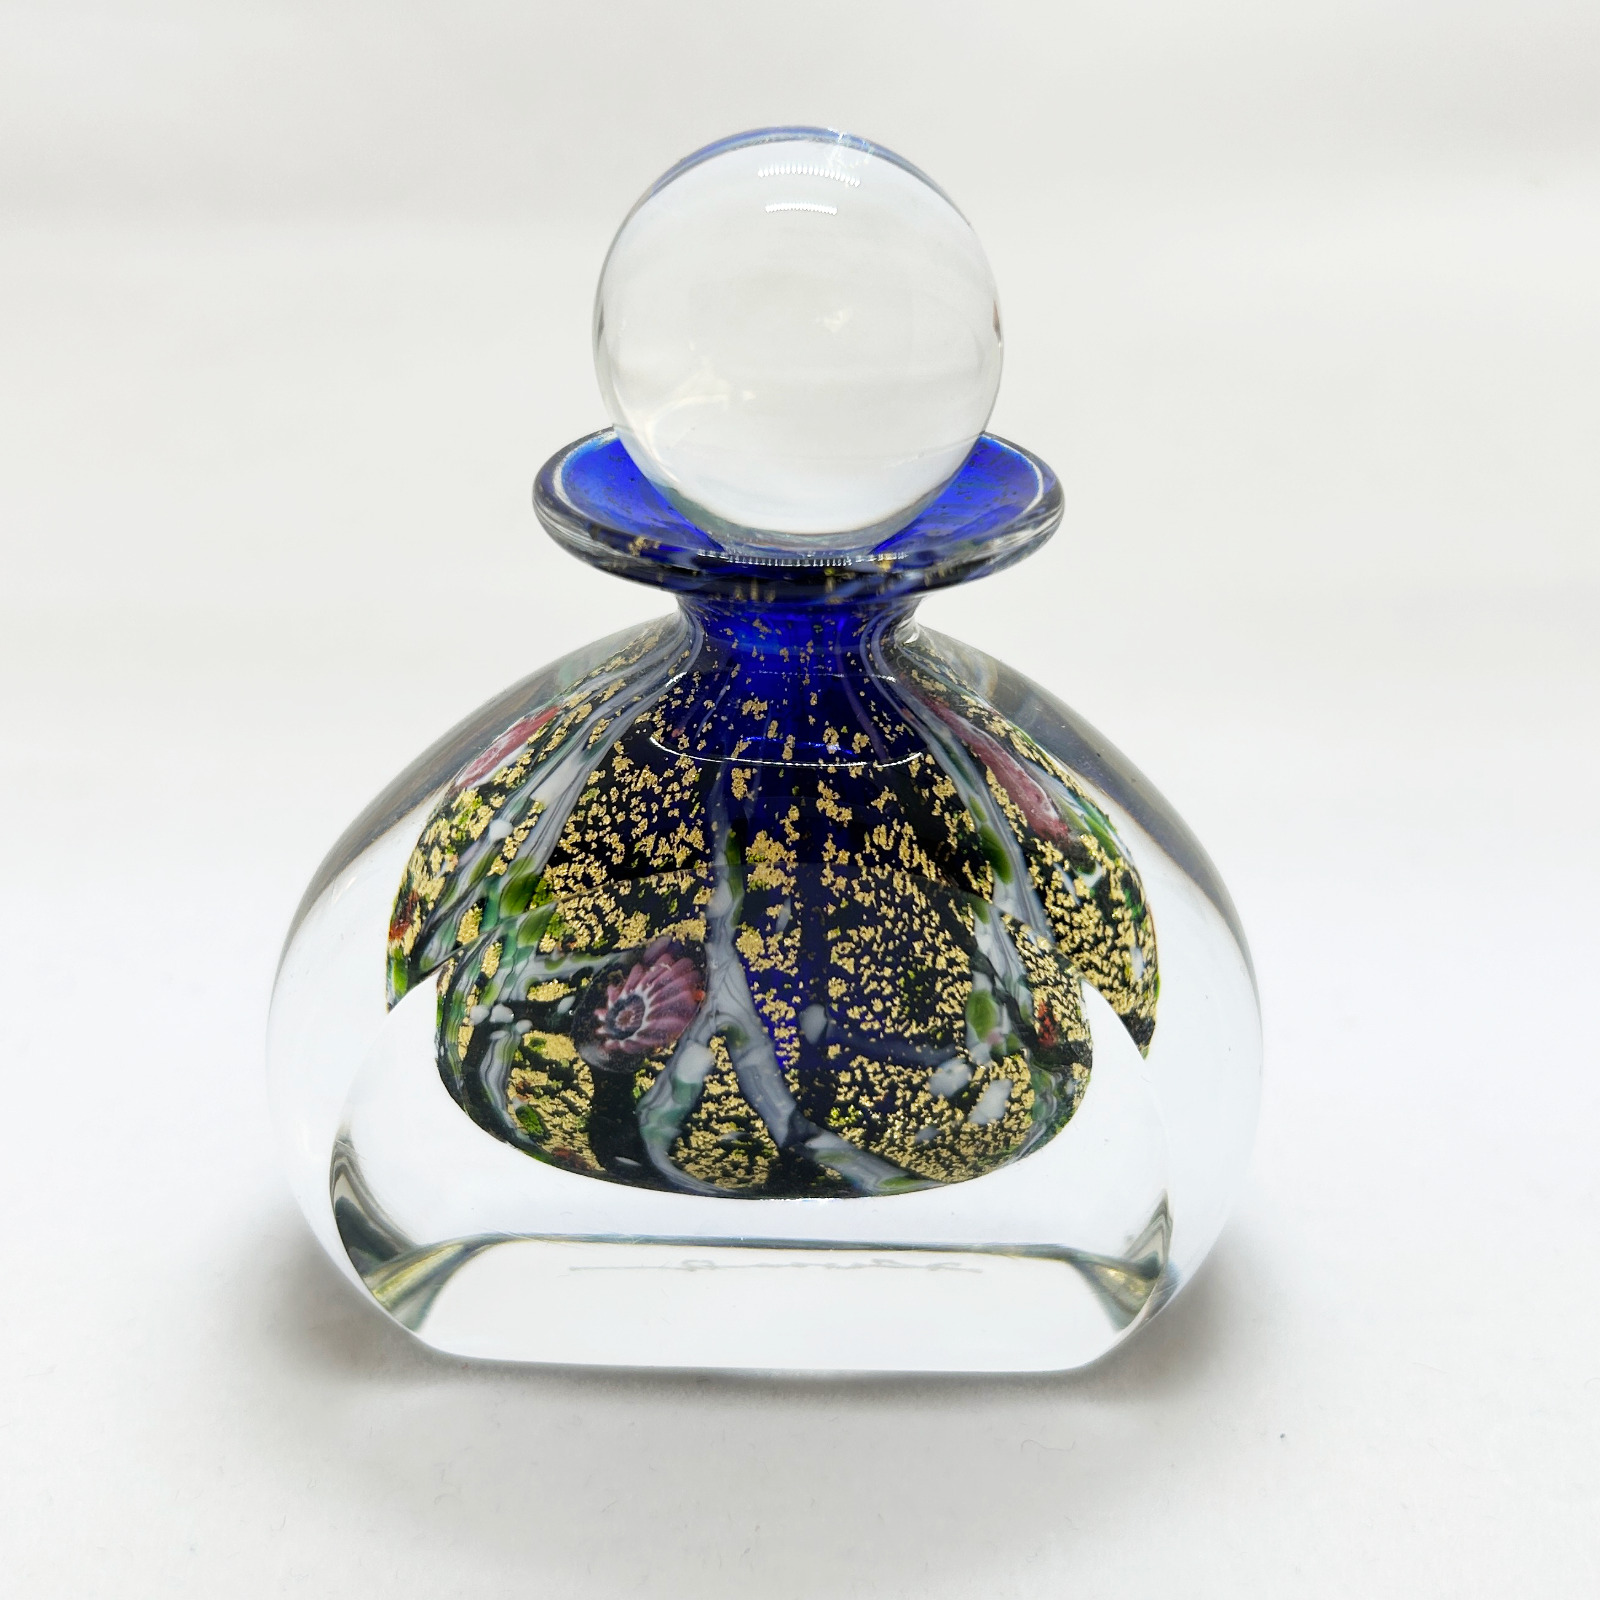 Kuroki Kuniaki\'s Miniature Perfume Bottle - See Video for Exquisite Details